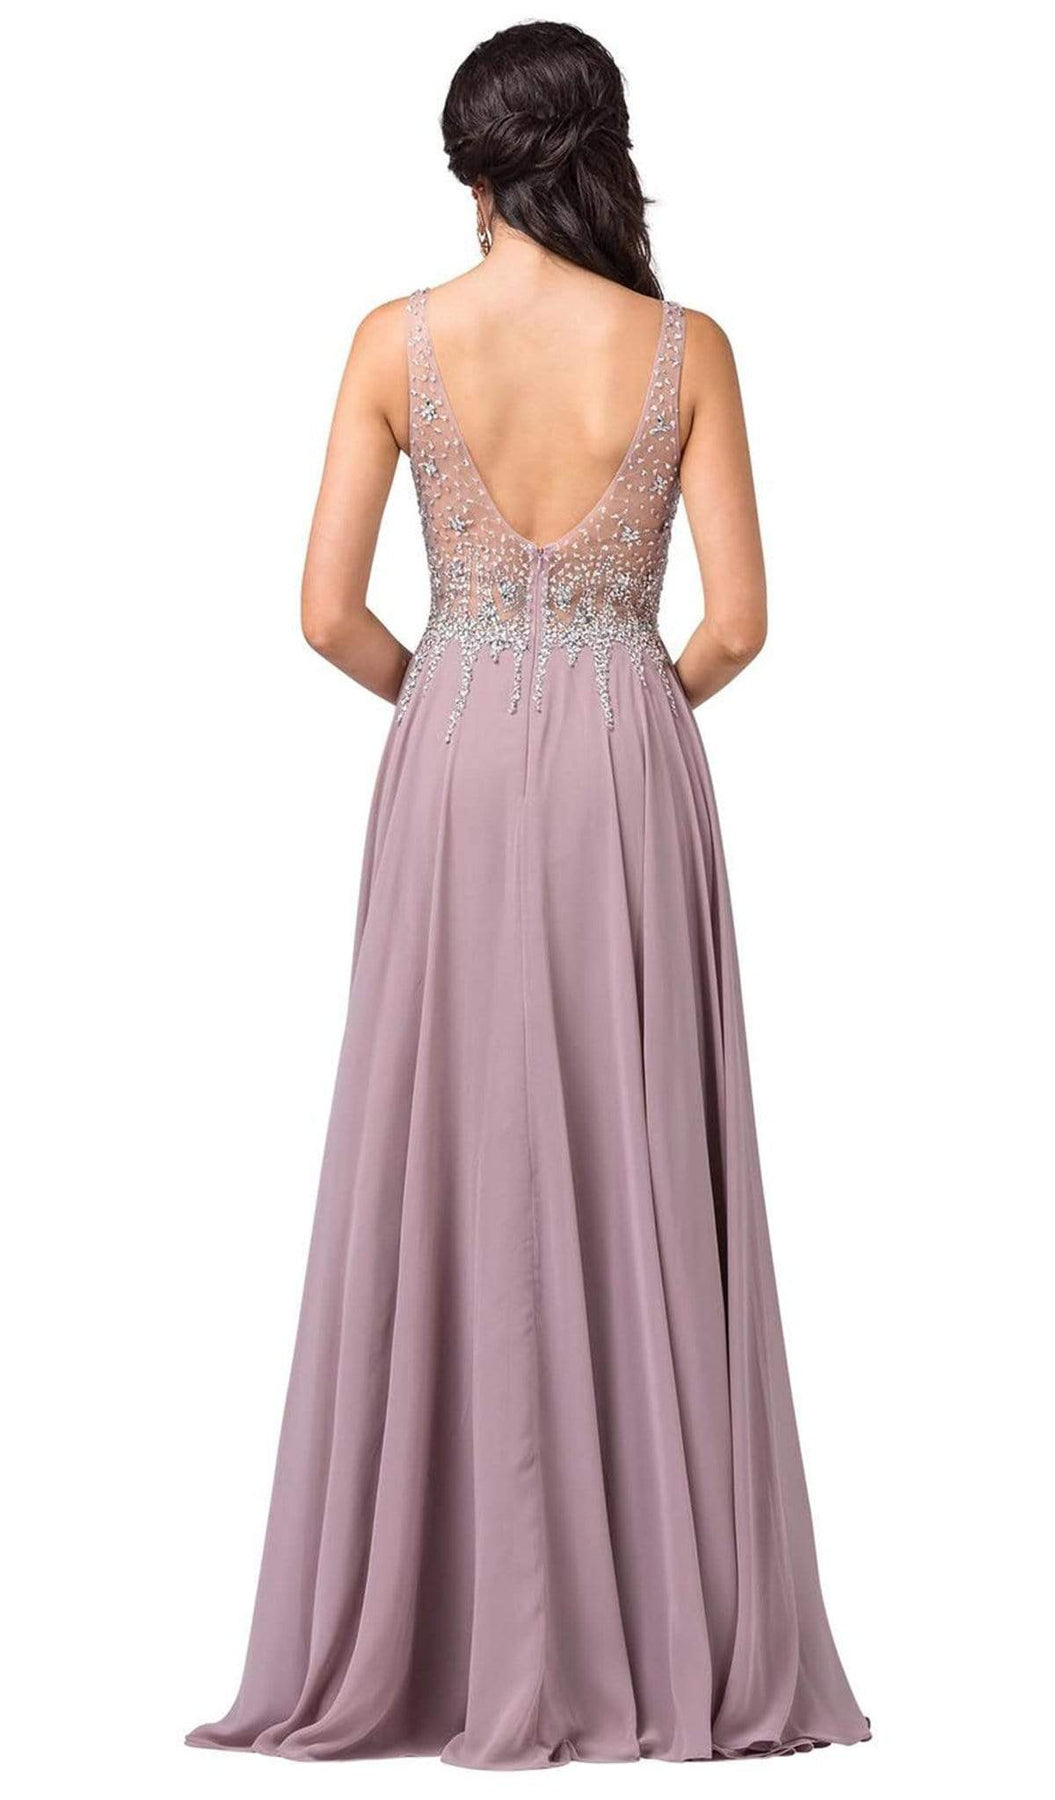 Dancing Queen - 2570 Jewel Ornate Illusion Bodice Chiffon Prom Dress Special Occasion Dress